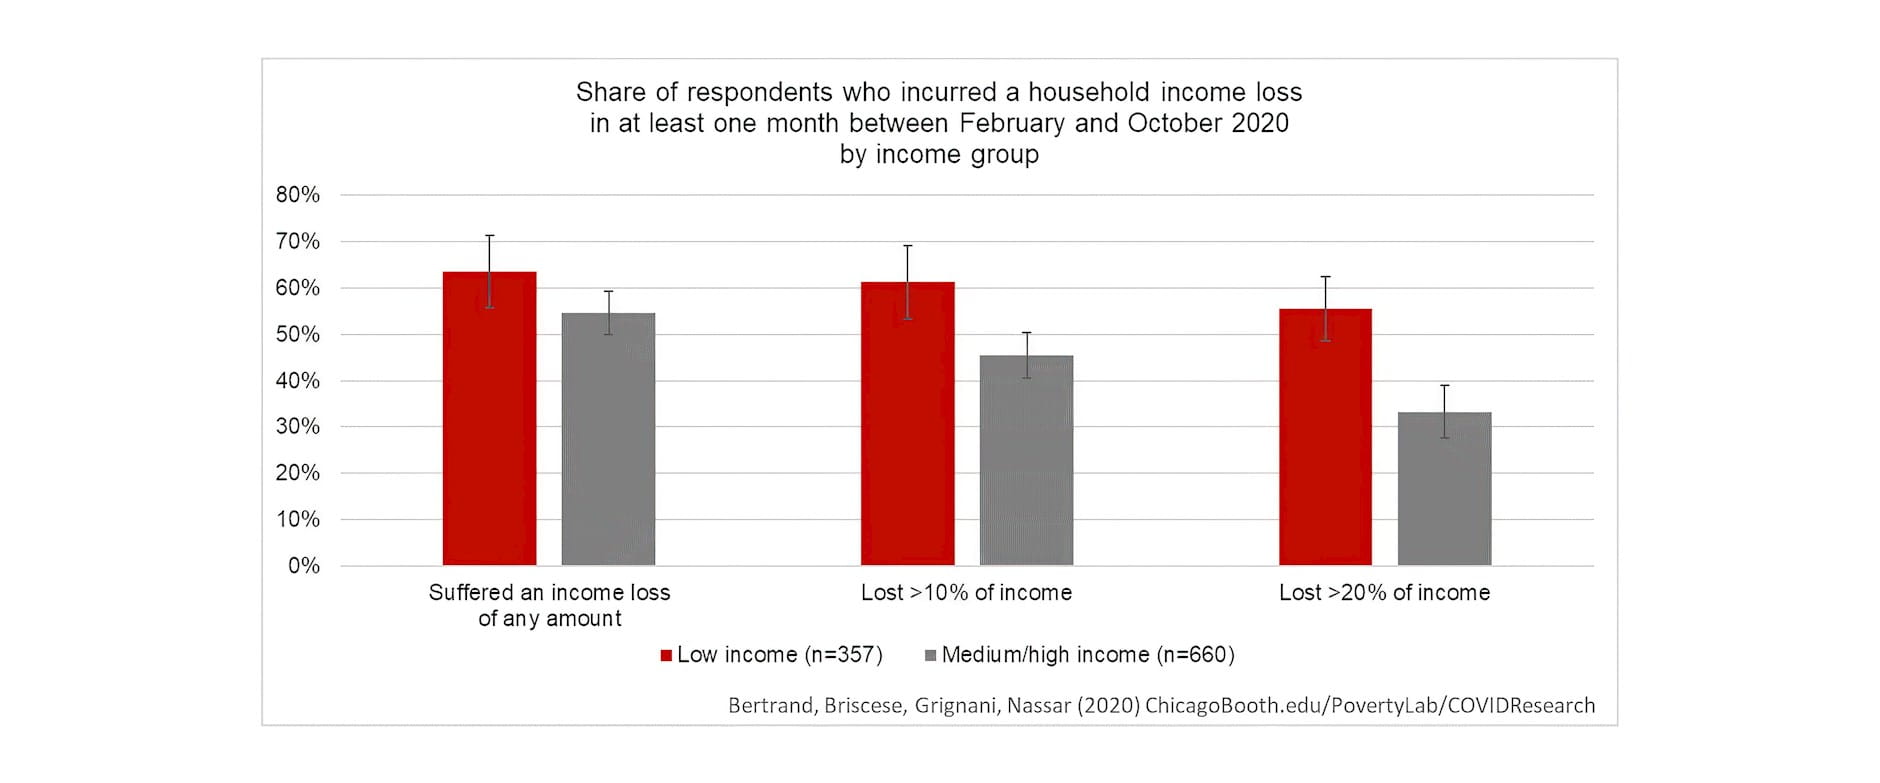 Bar graph showing income shocks based on income